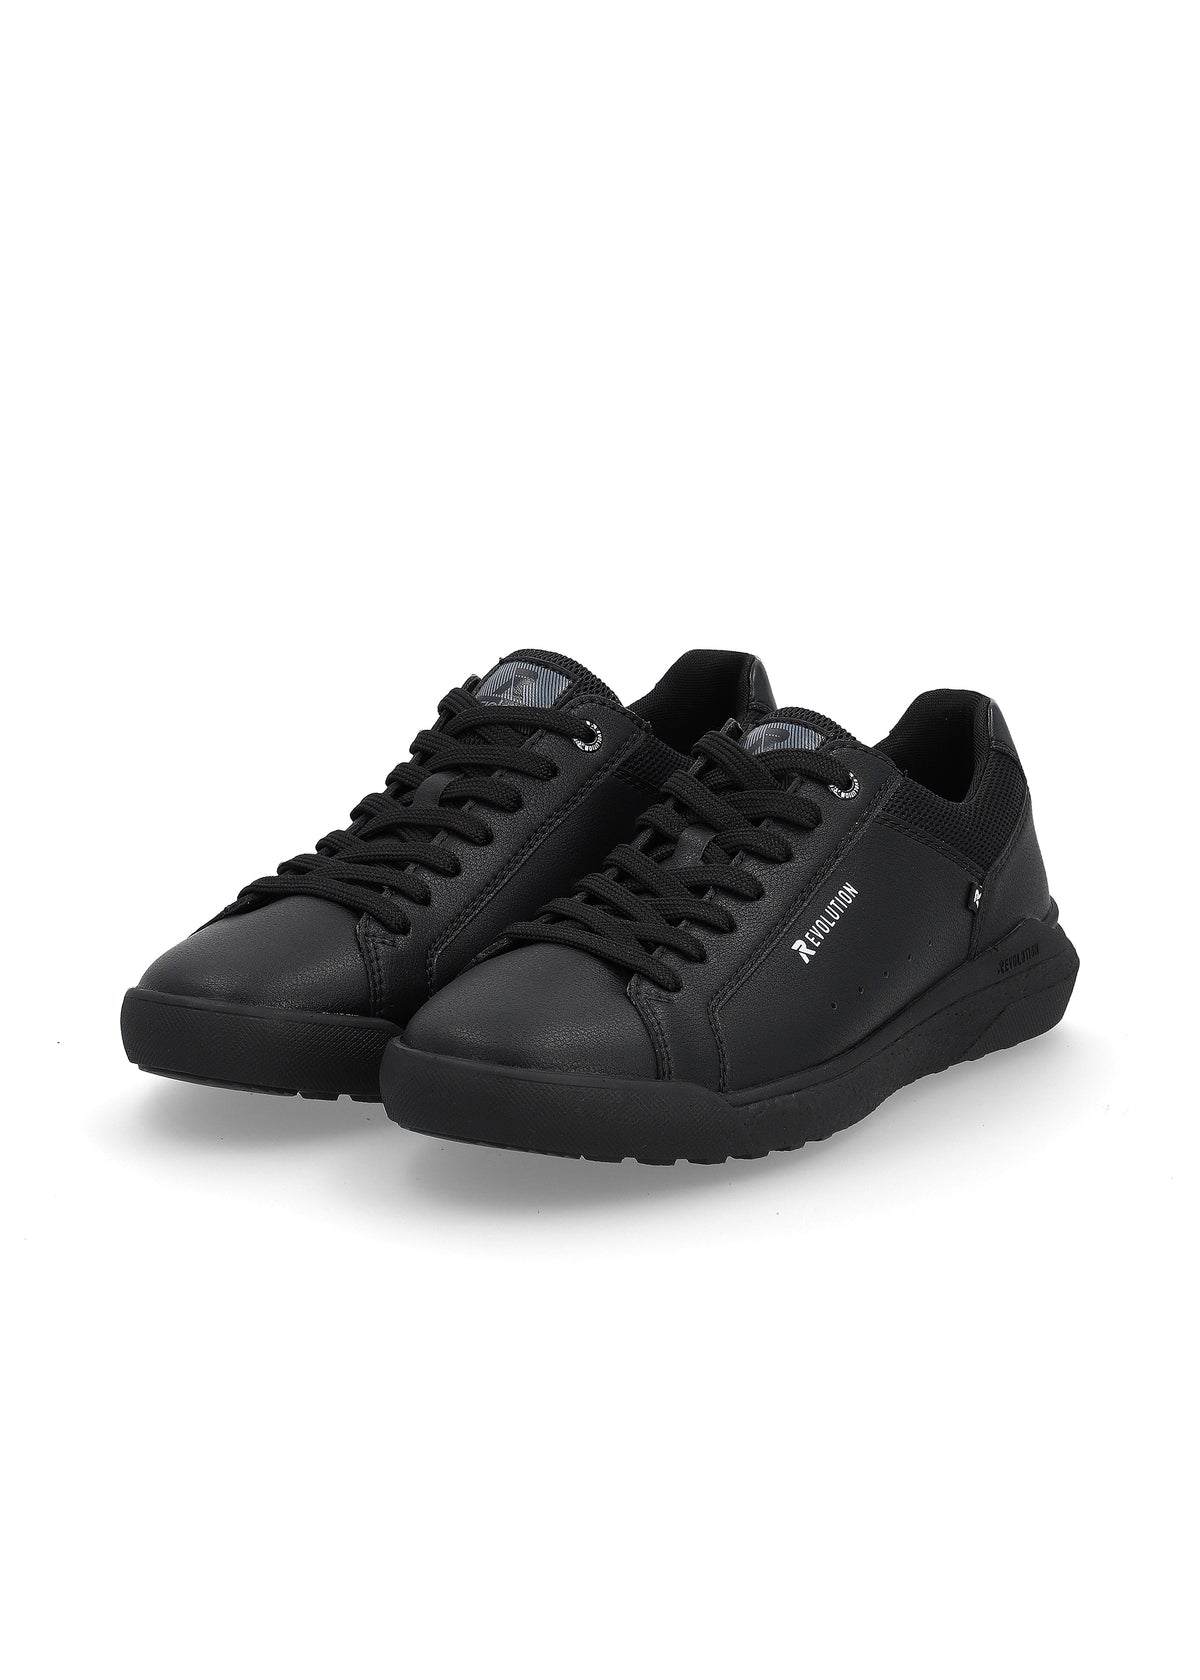 Leather sneakers - black, wider last, Rieker Evolution